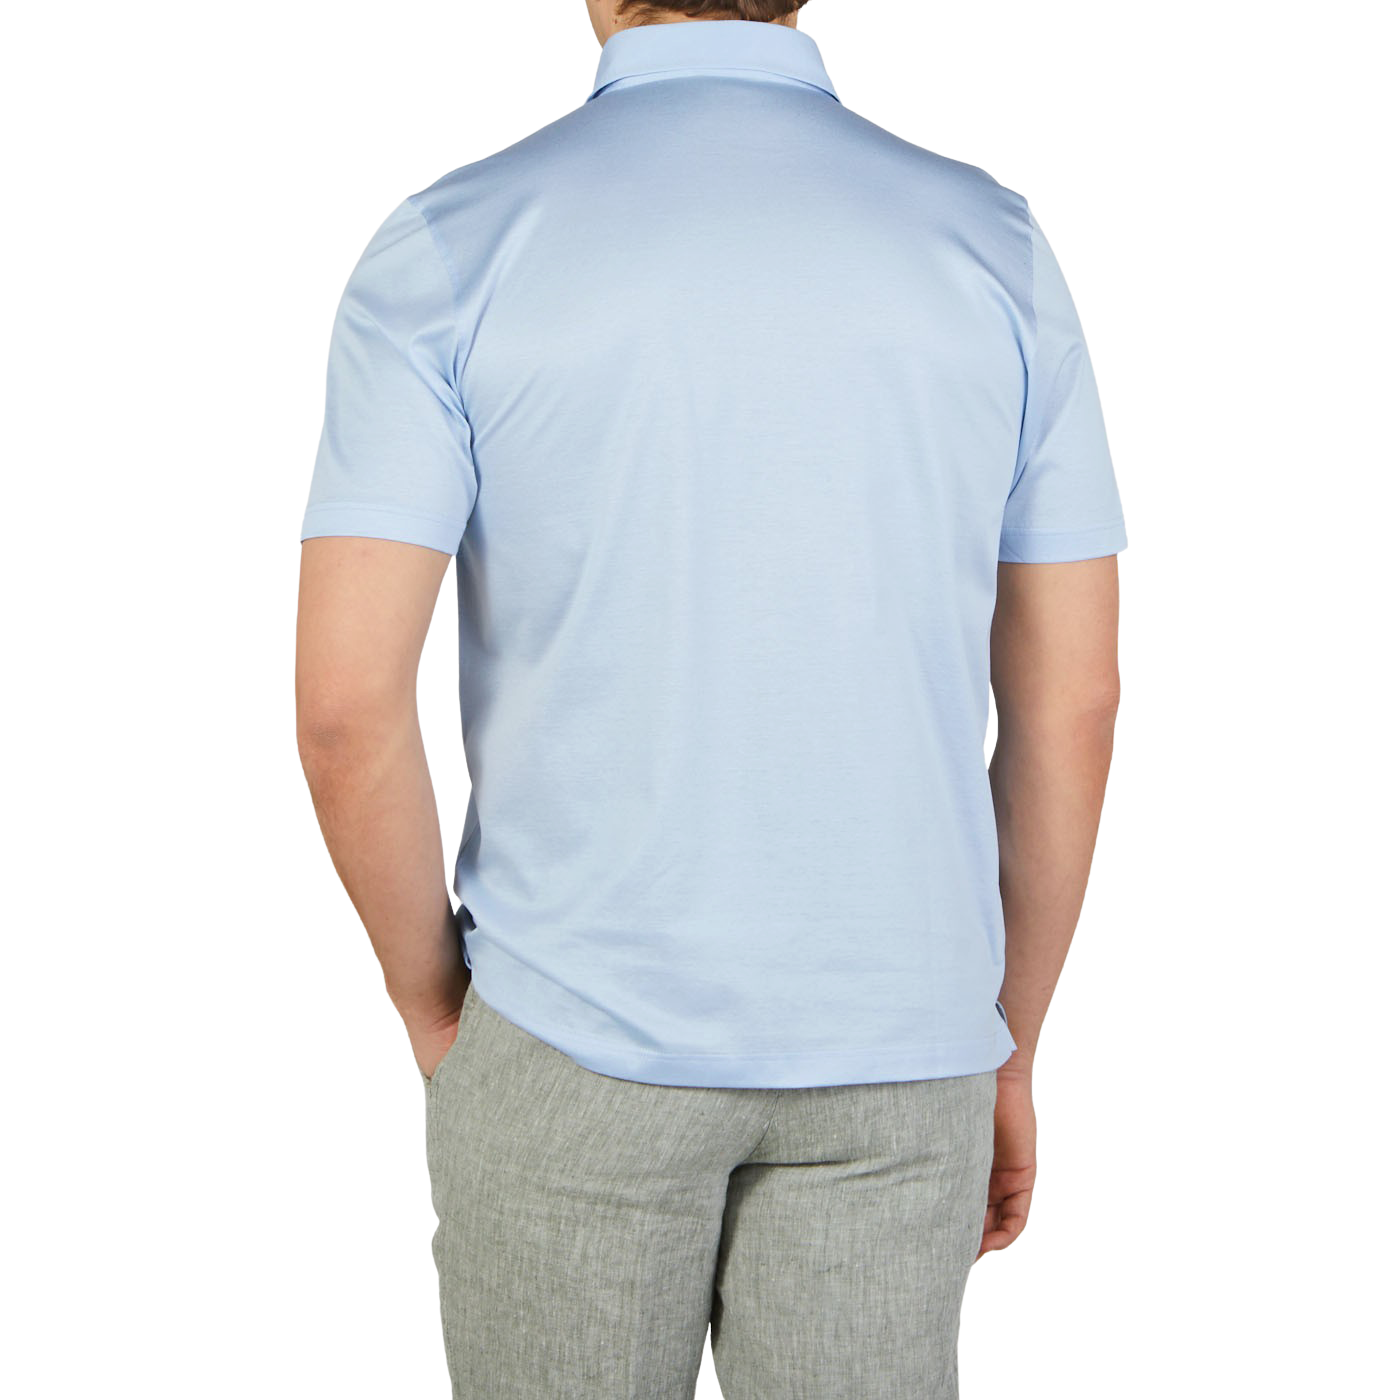 Gran Sasso - Sky Blue Cotton Filo Scozia Polo Shirt | Baltzar